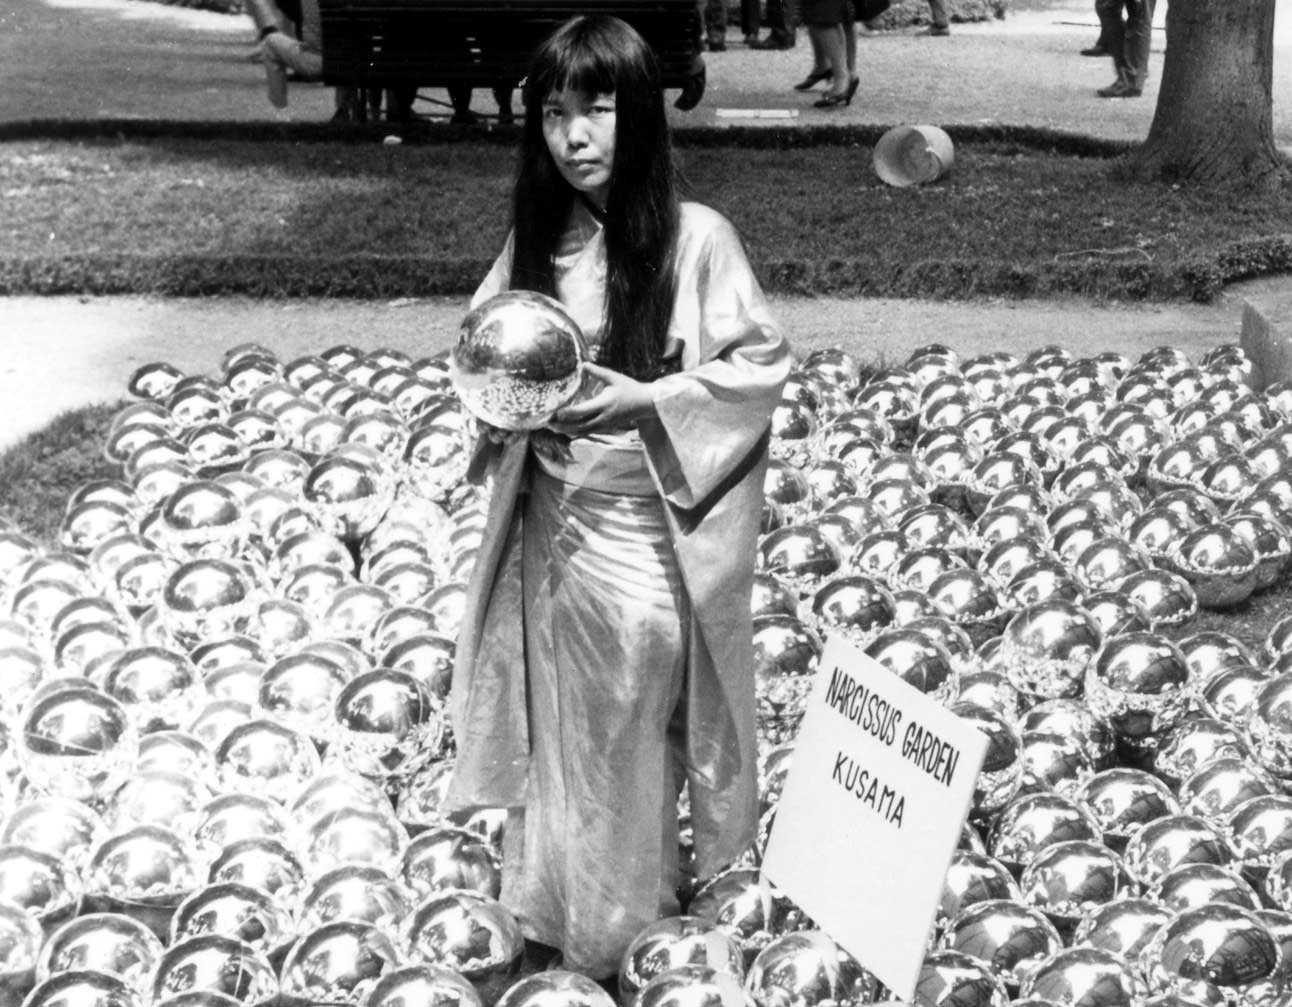 Yayoi Kusama's Narcissus Garden at the Venice Biennale, 1966